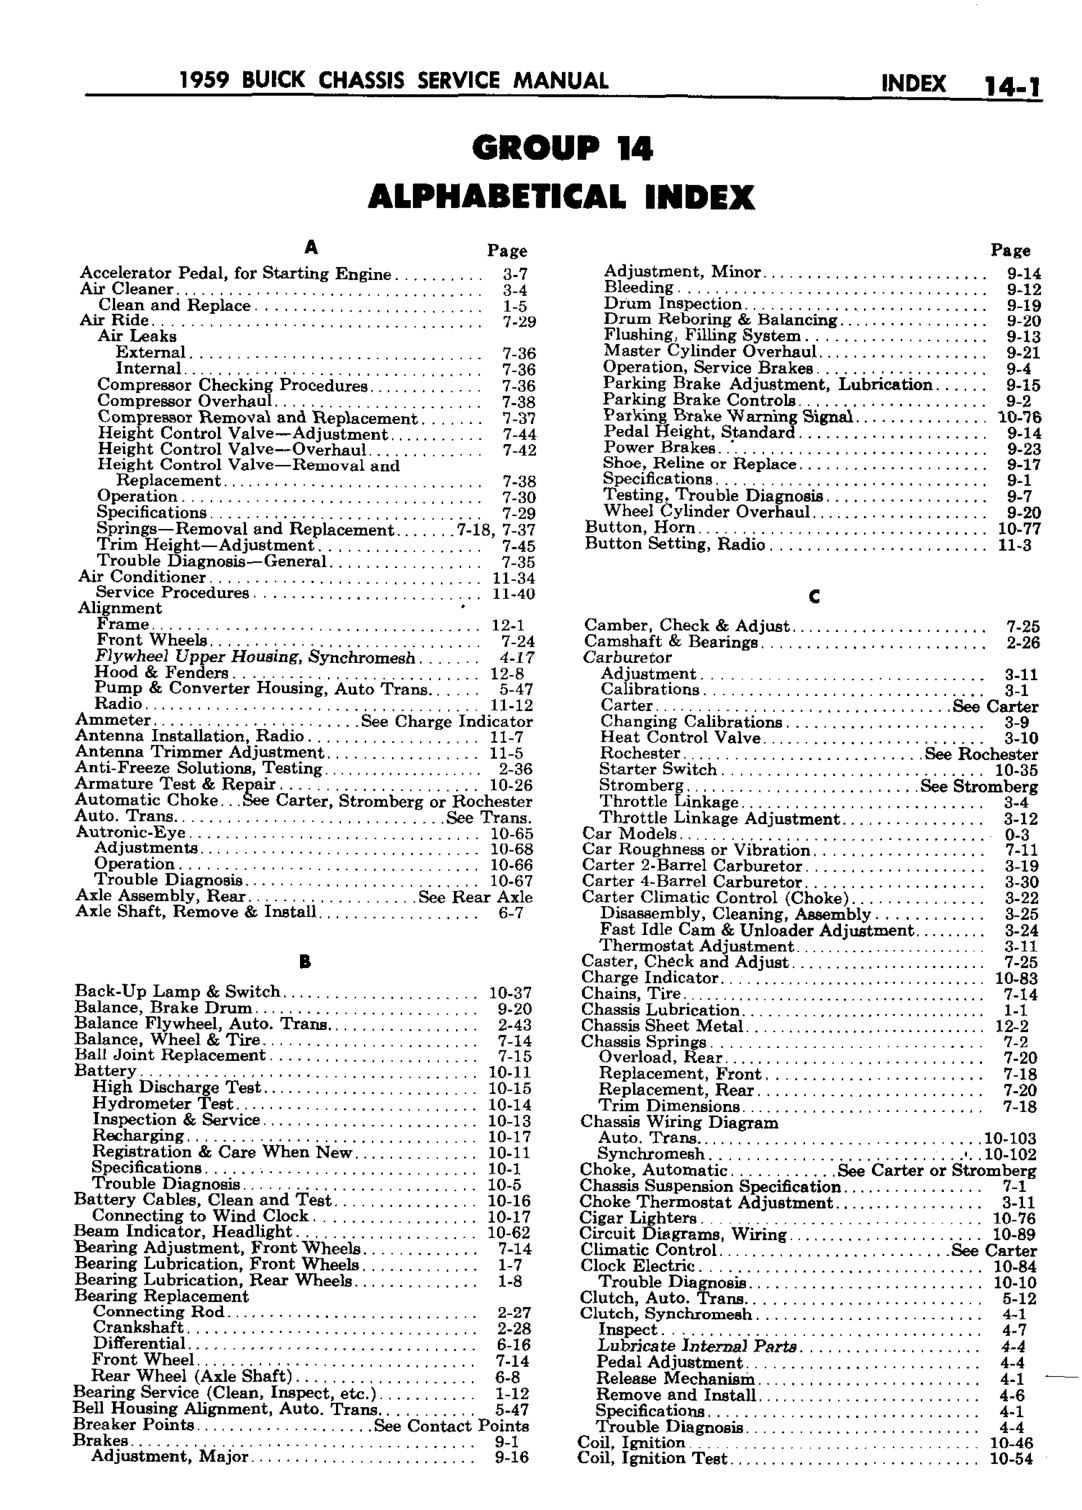 n_14 1959 Buick Shop Manual - Index-001-001.jpg